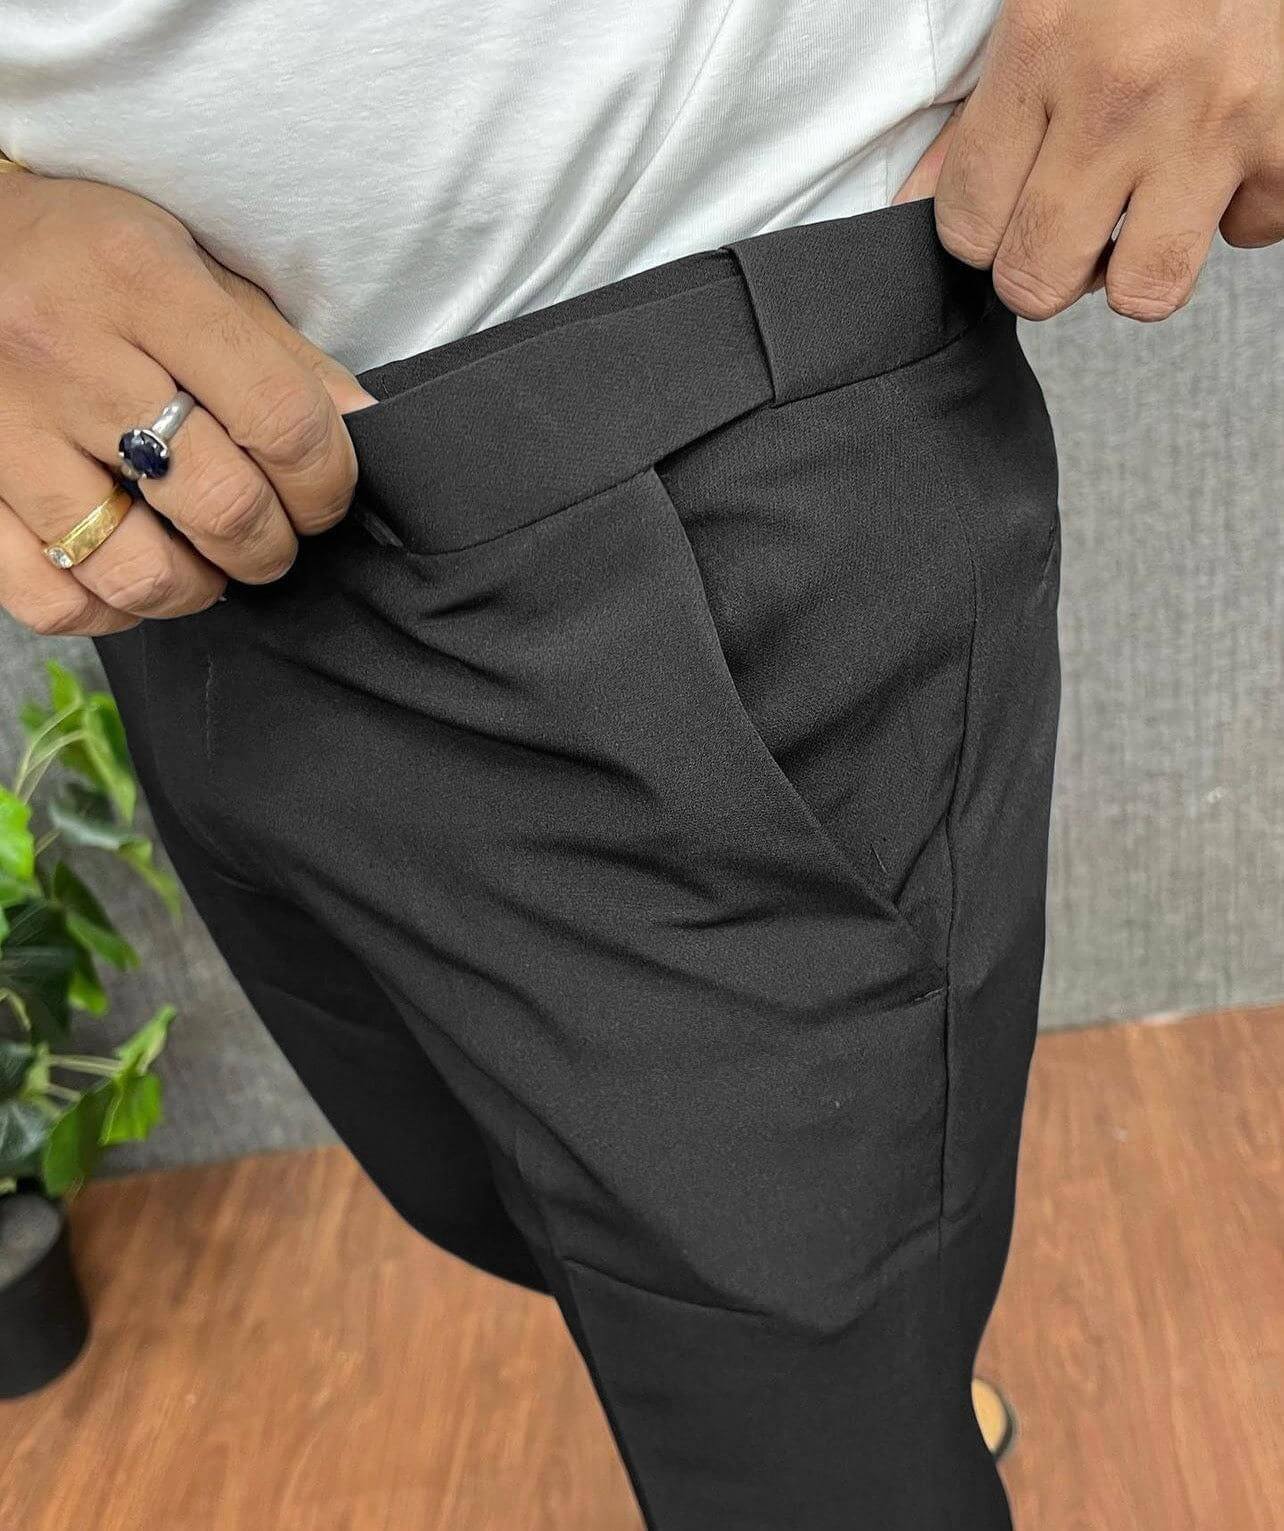 Boys Kids Black Half Elastic Waist Trousers School Uniform Trouser Pants |  eBay